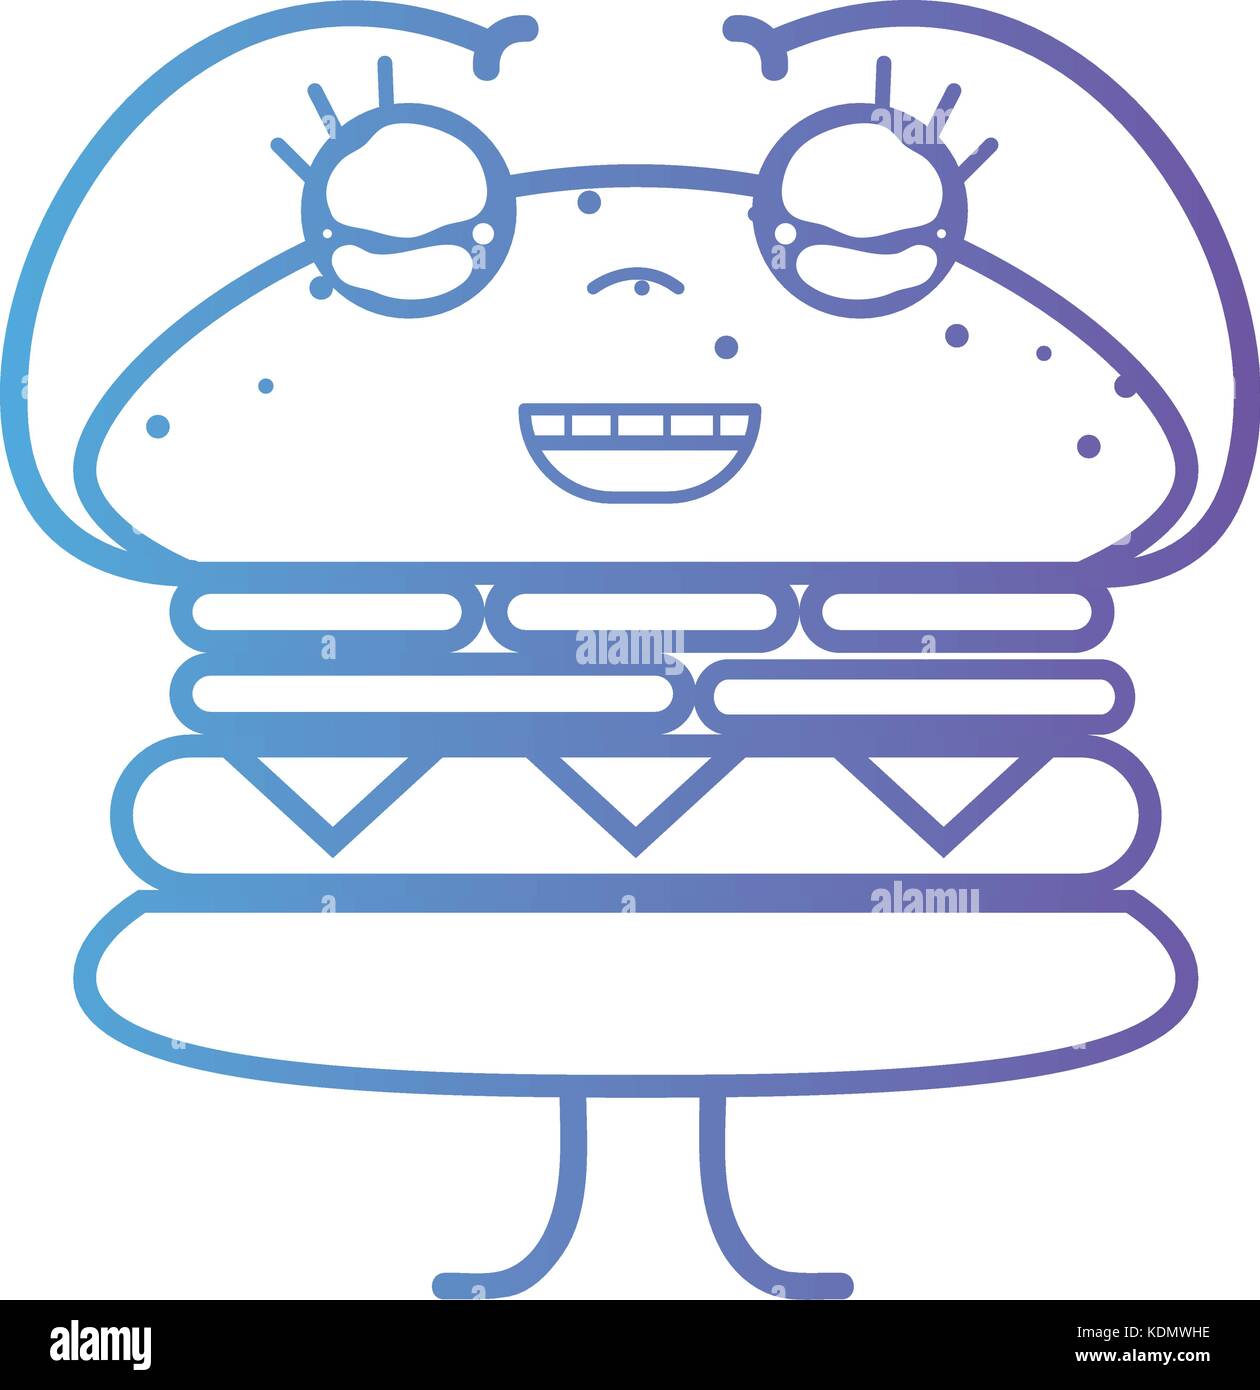 Kawaii cute heureux ligne fastfood hamburger Illustration de Vecteur